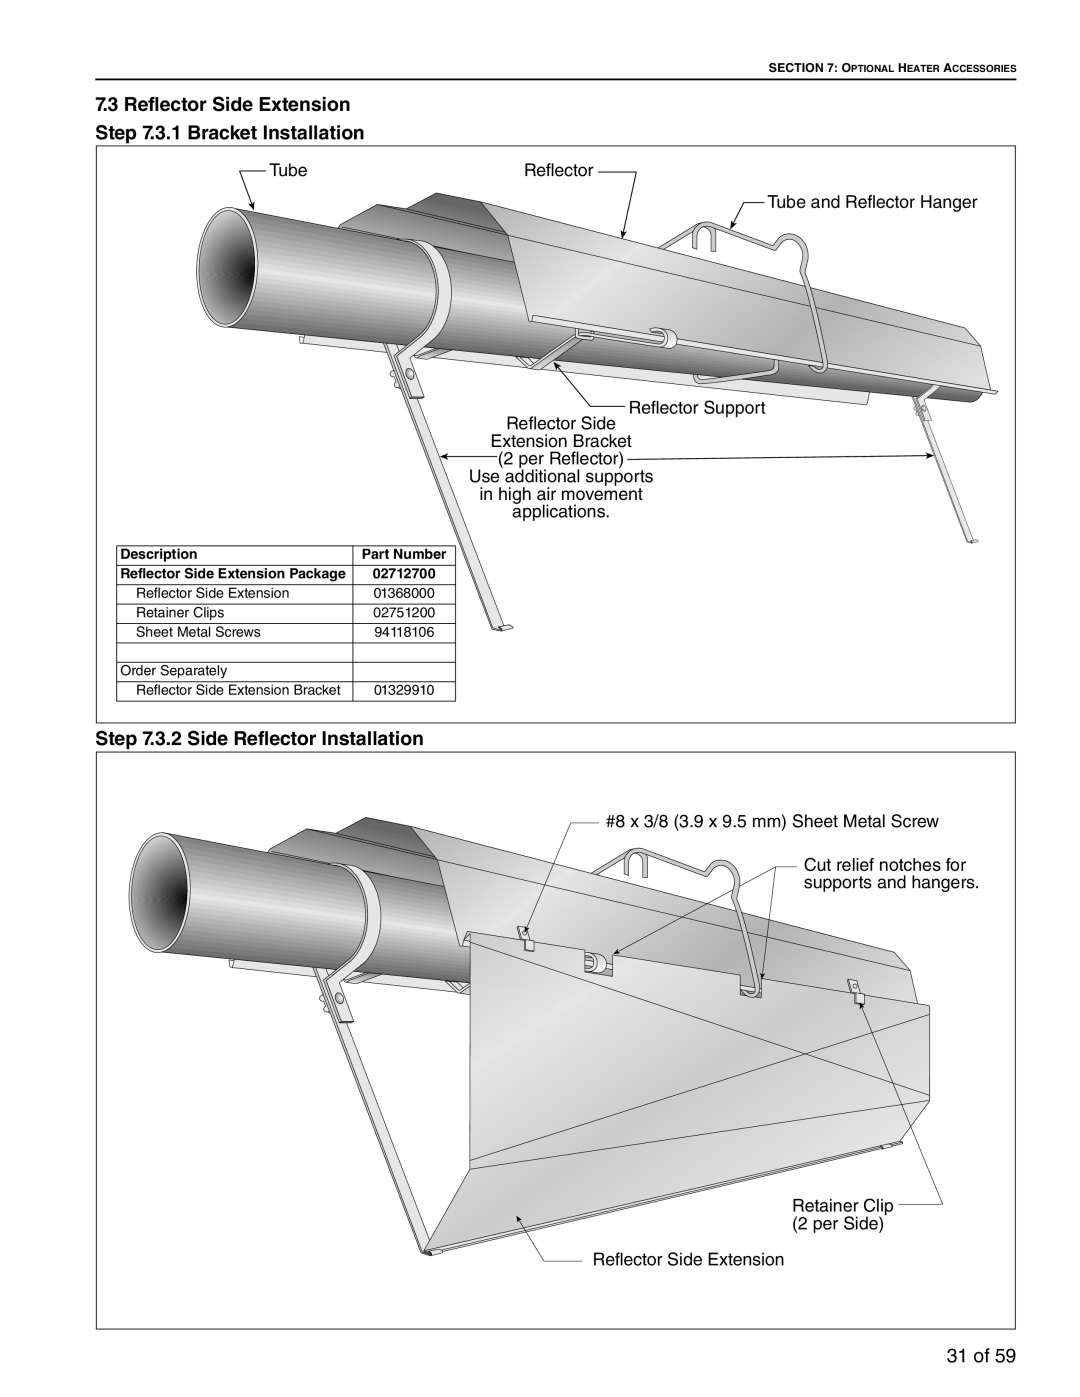 Roberts Gorden BH-200, BH-60 Reflector Side Extension, 3.1 Bracket Installation, 3.2 Side Reflector Installation, 31 of 